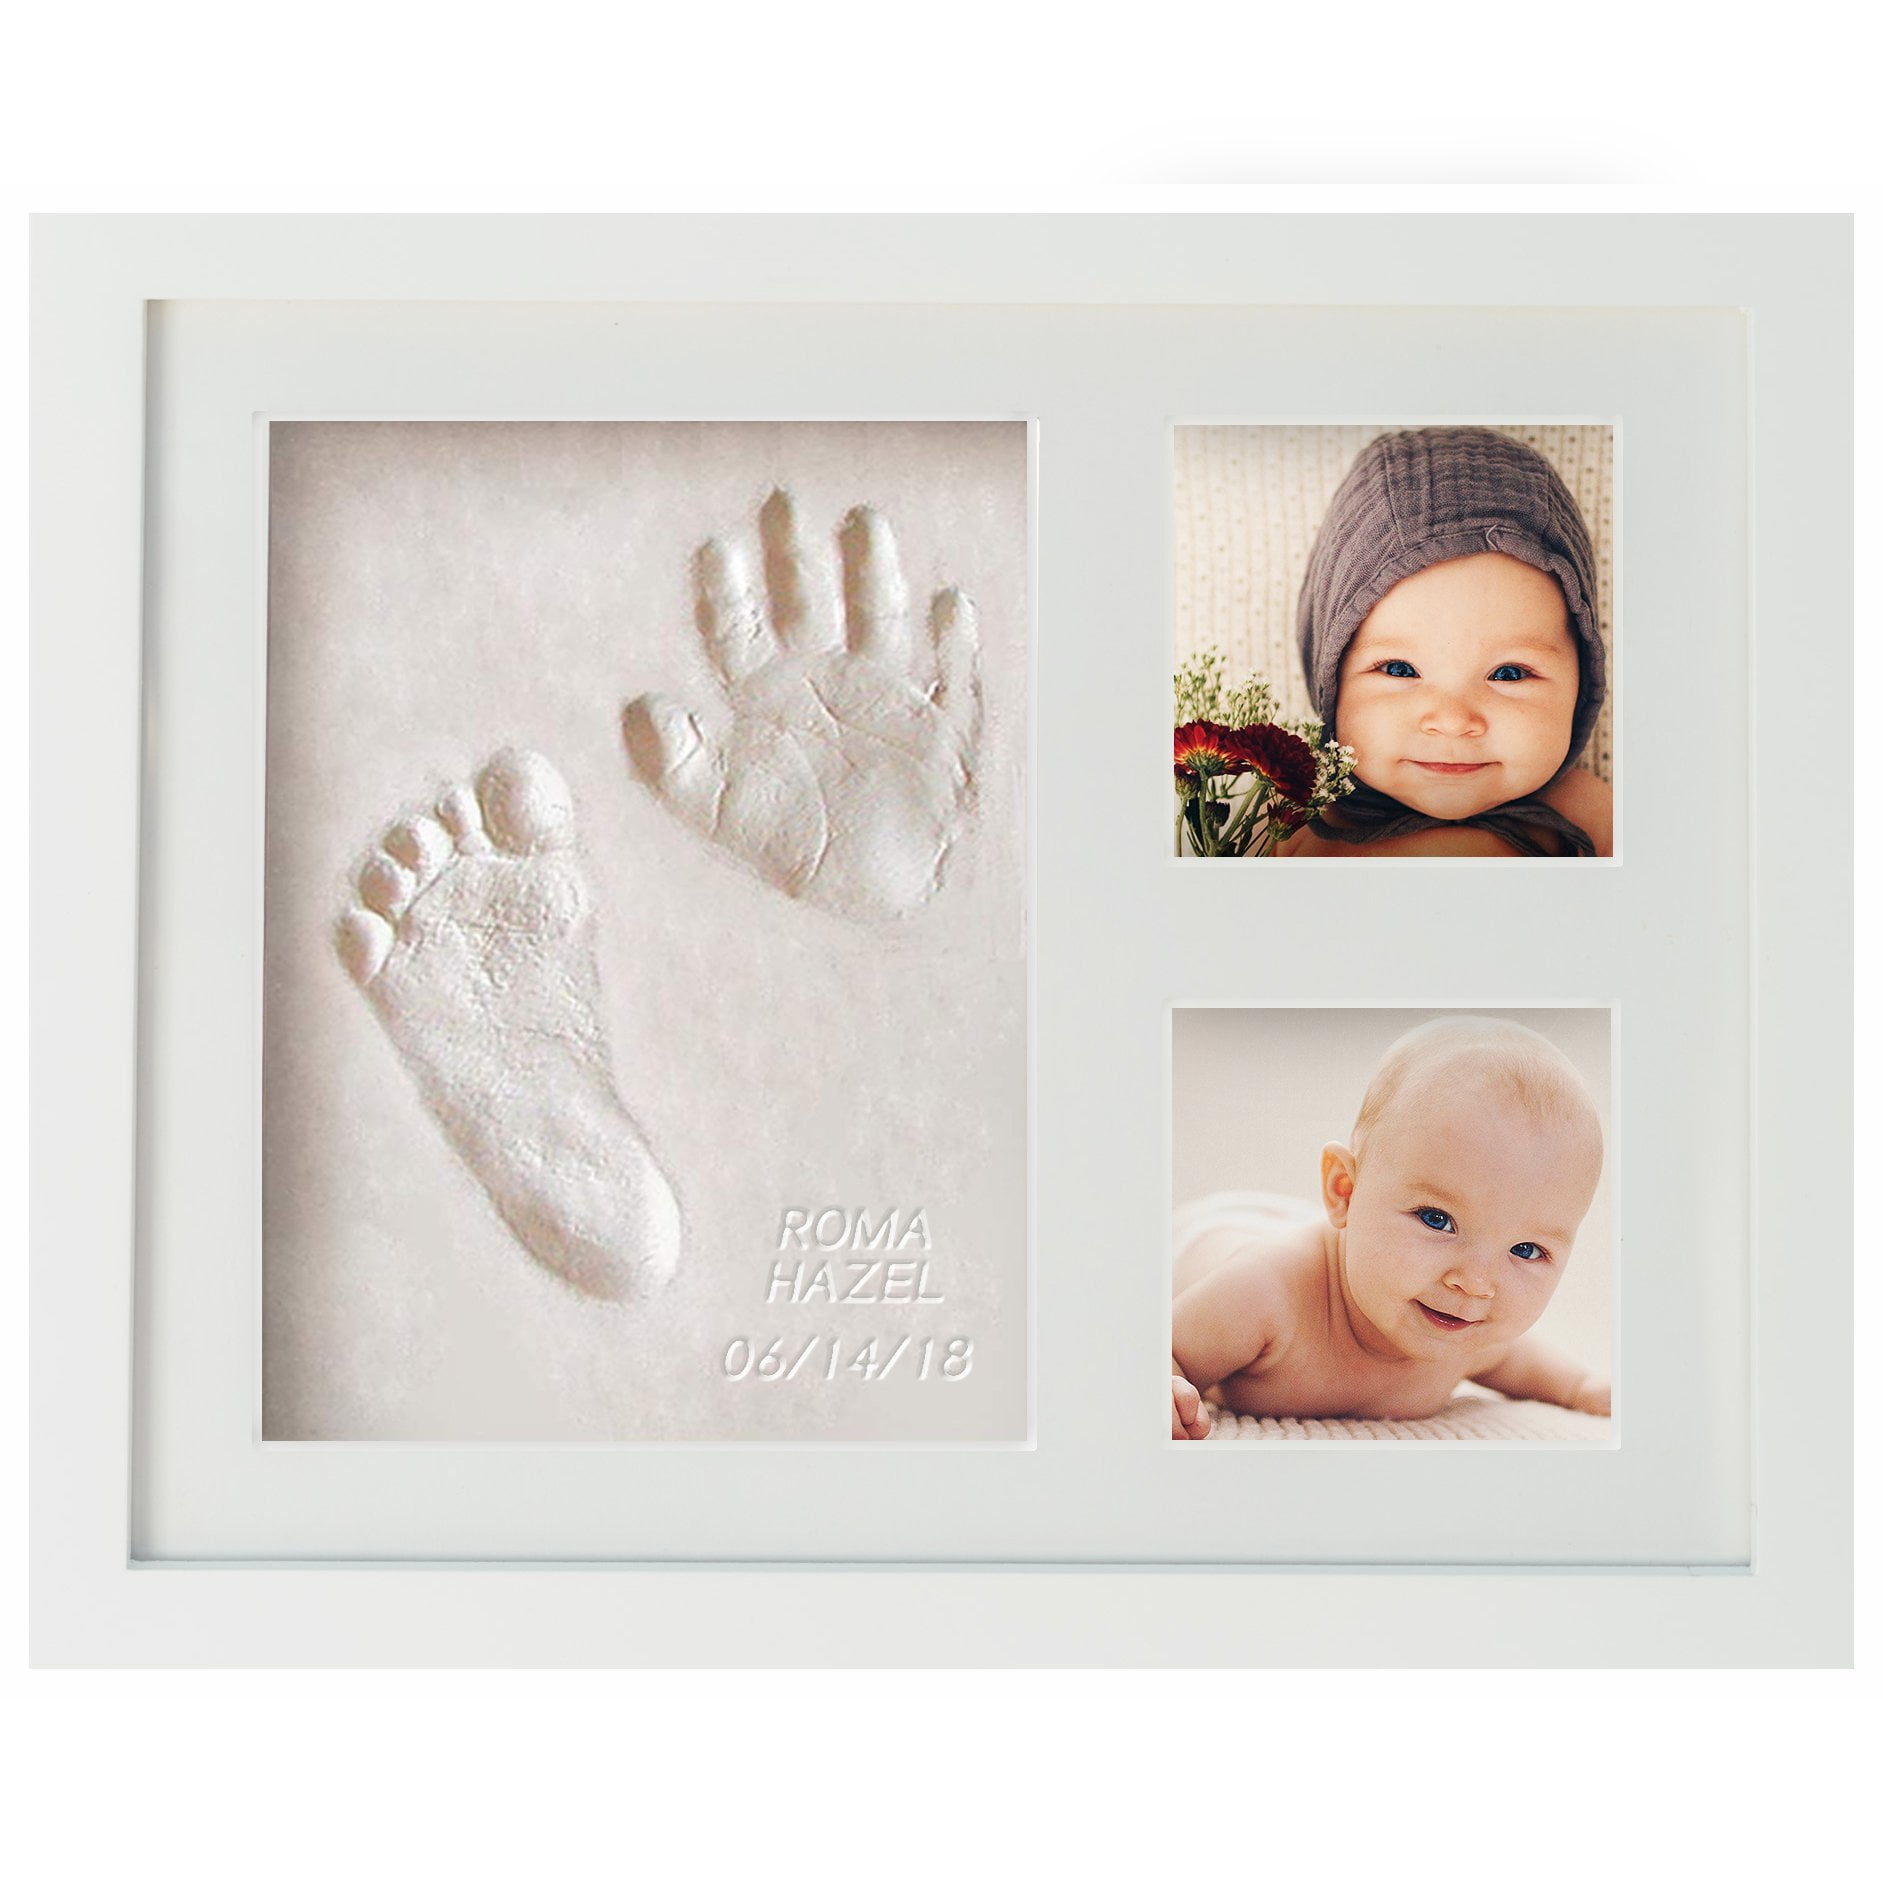 Didplay Beautiful Baby Handprint and Footprint Photo Frame Kit Safe 